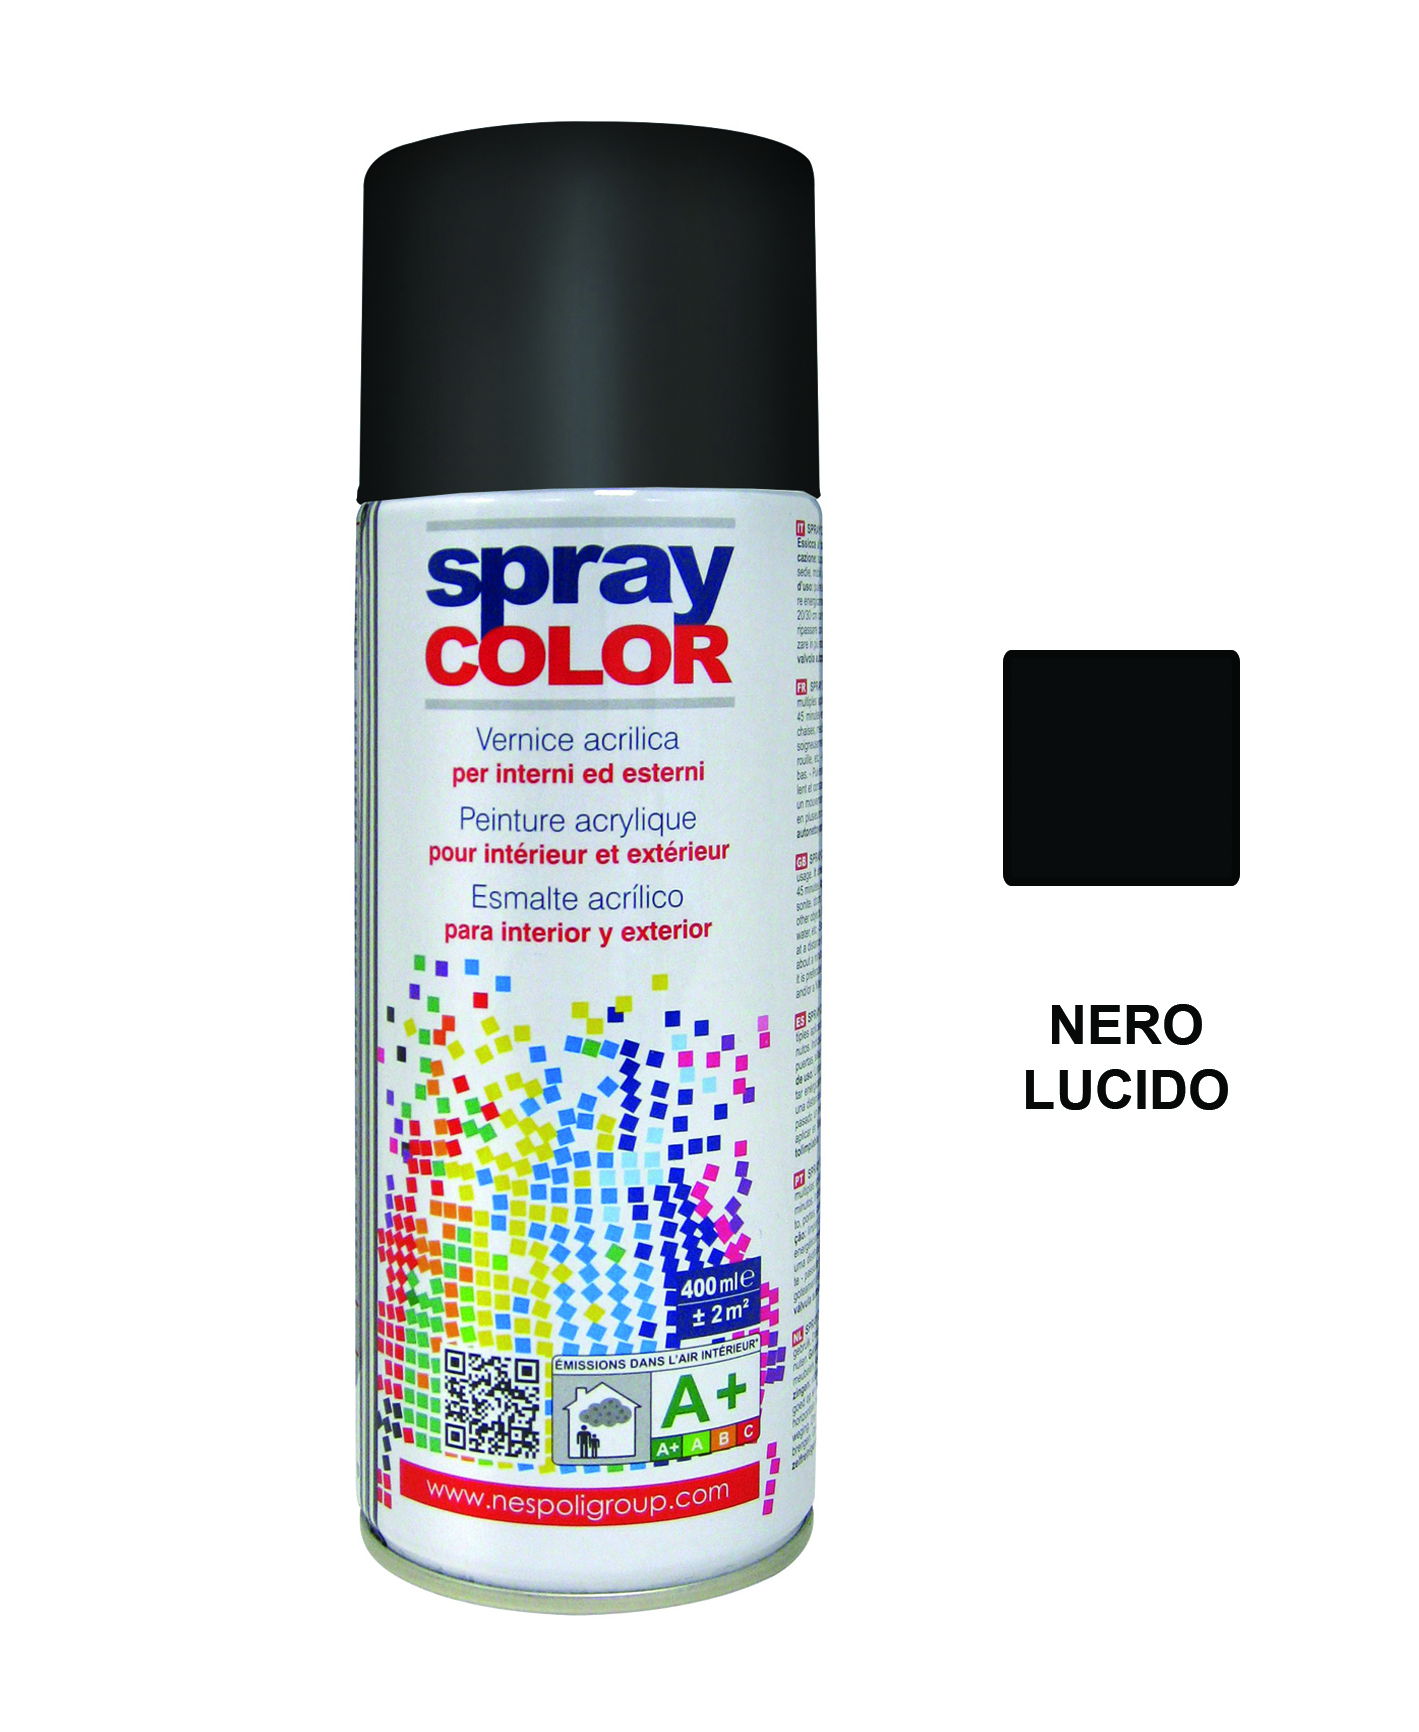 Spraycolor nero lucido 9005 400ml